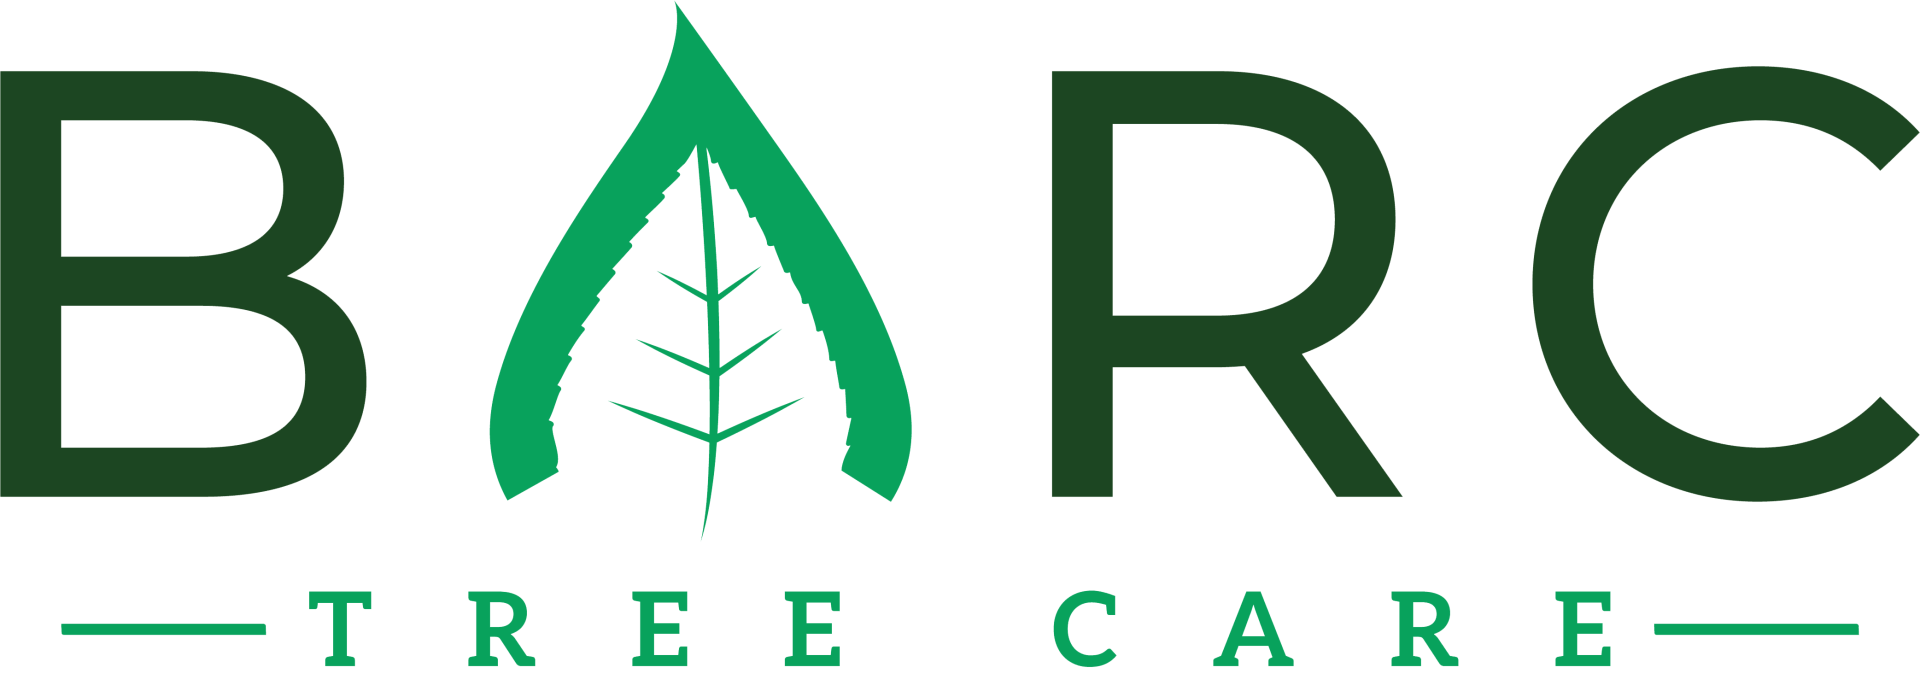 Barc Tree Care Logo